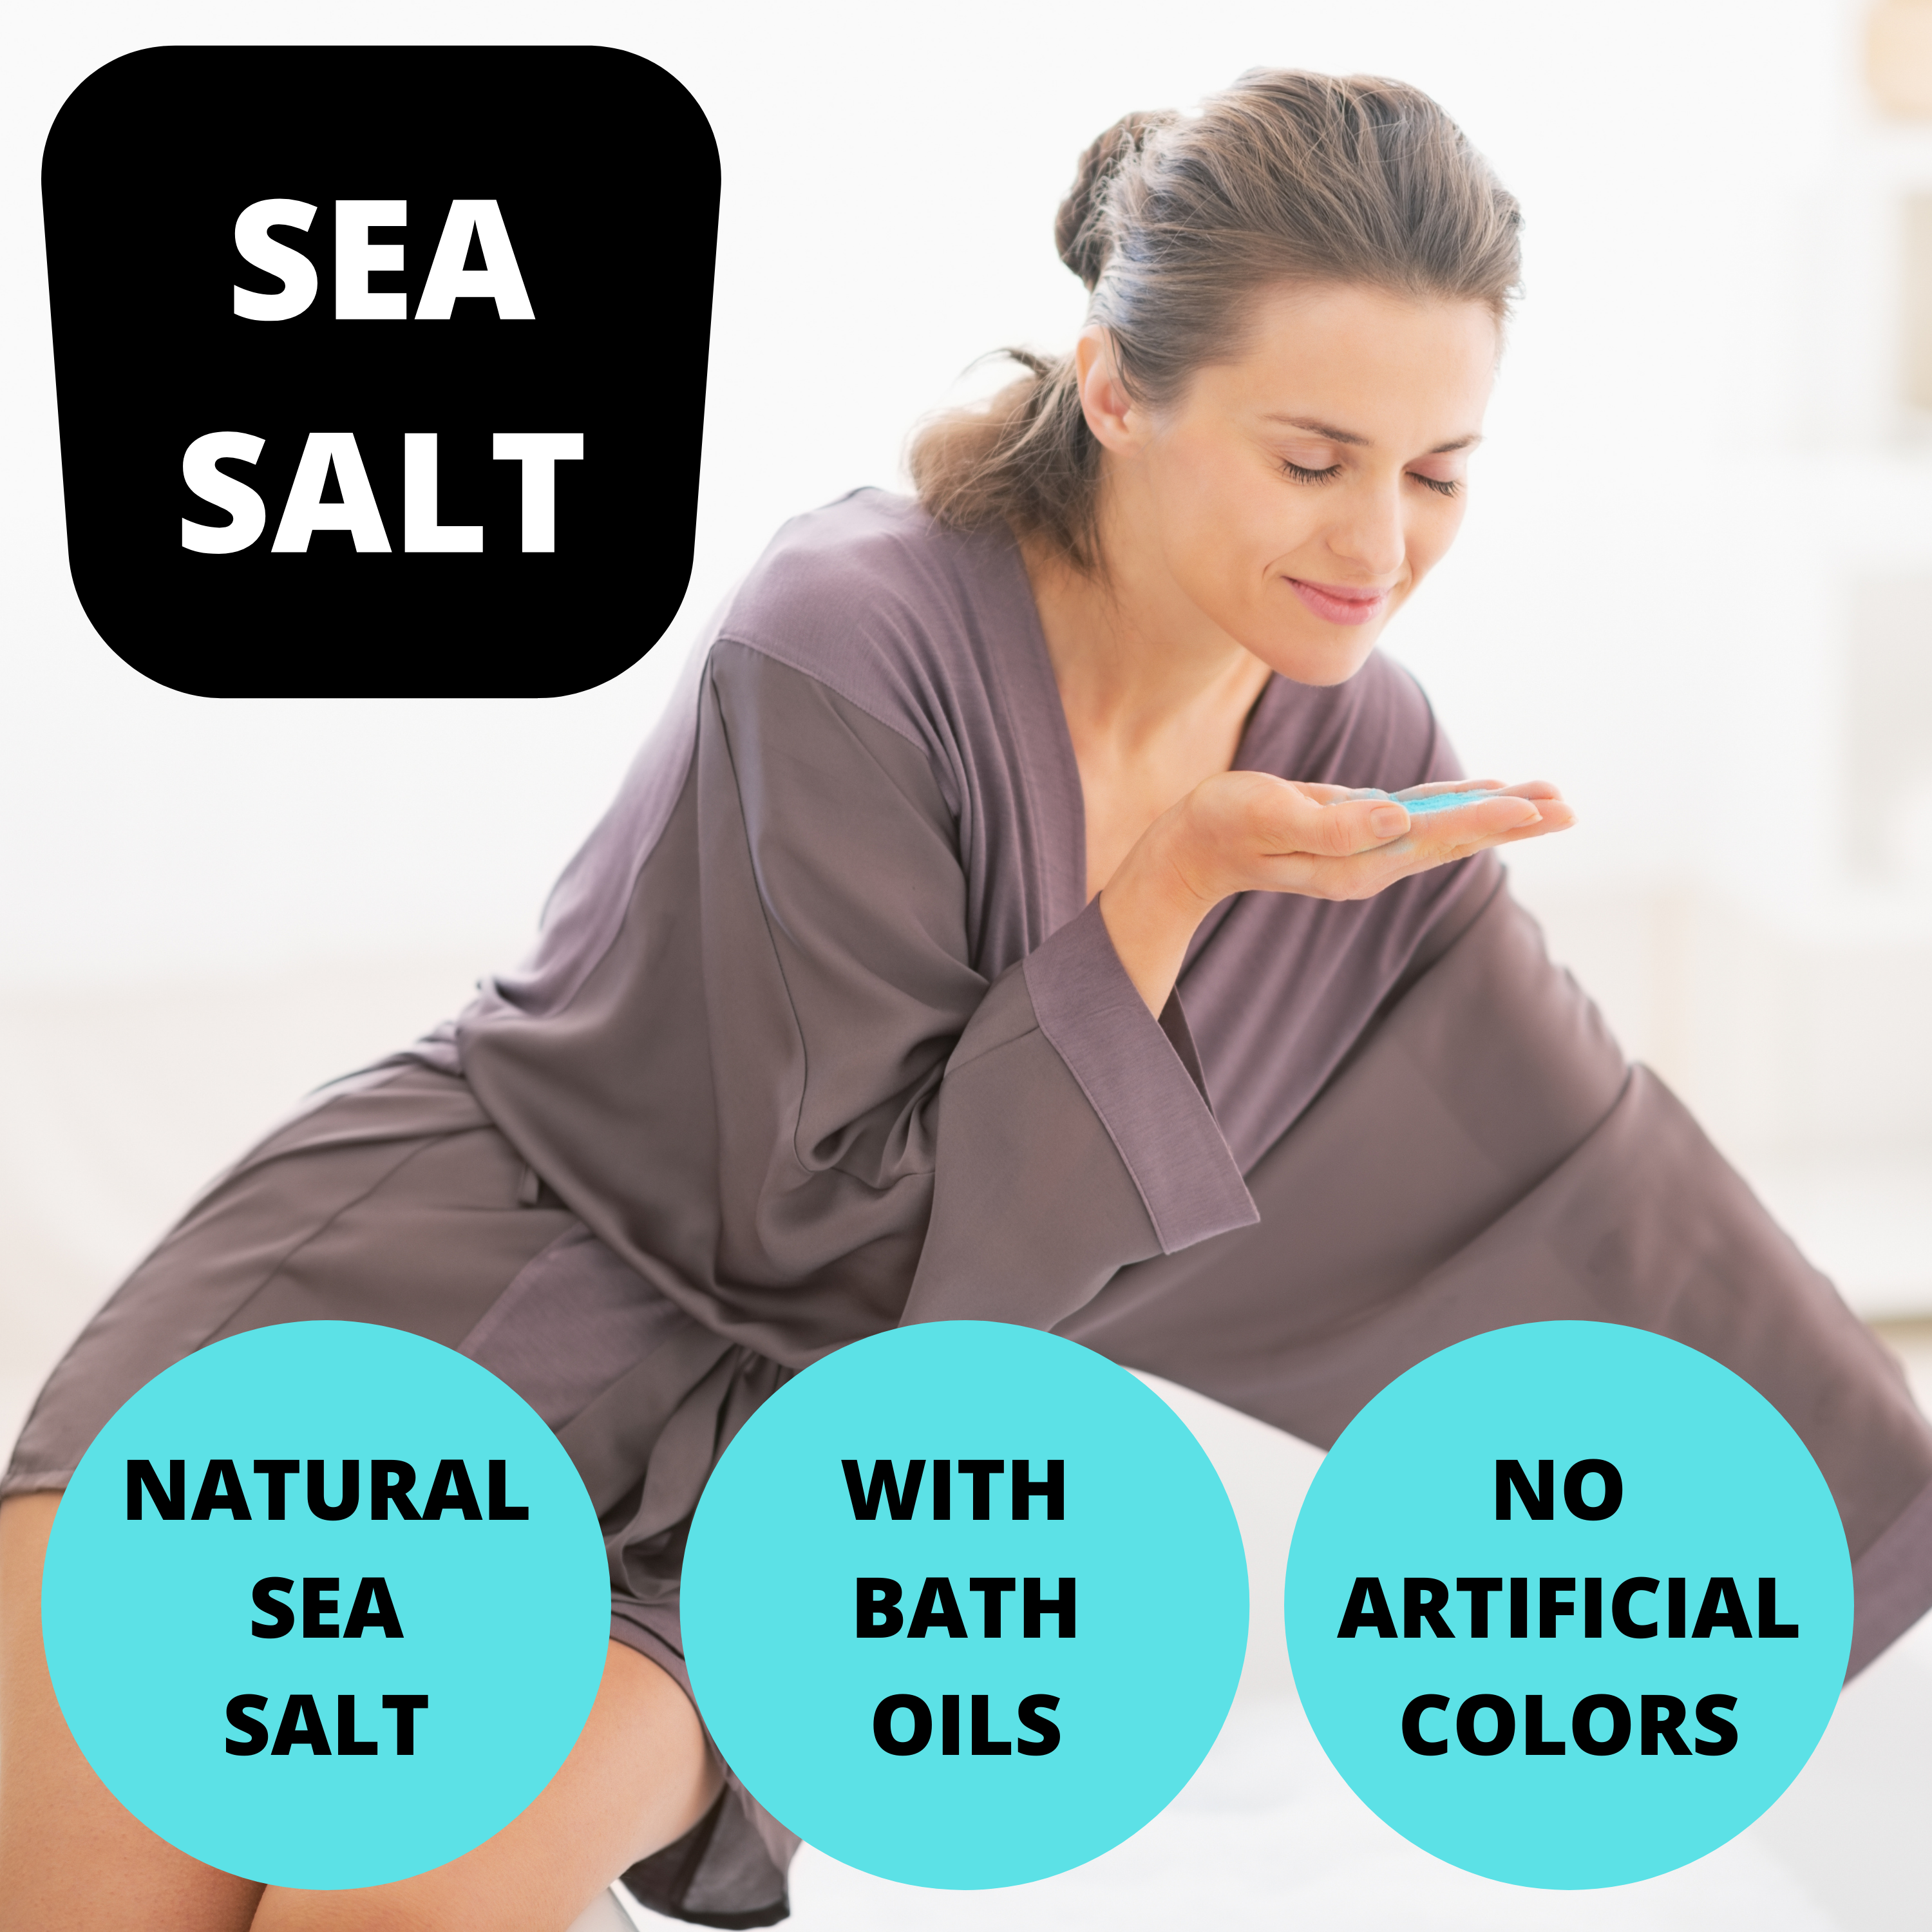 Black Canyon Kansas Sunflower Scented Sea Salt Bath Soak